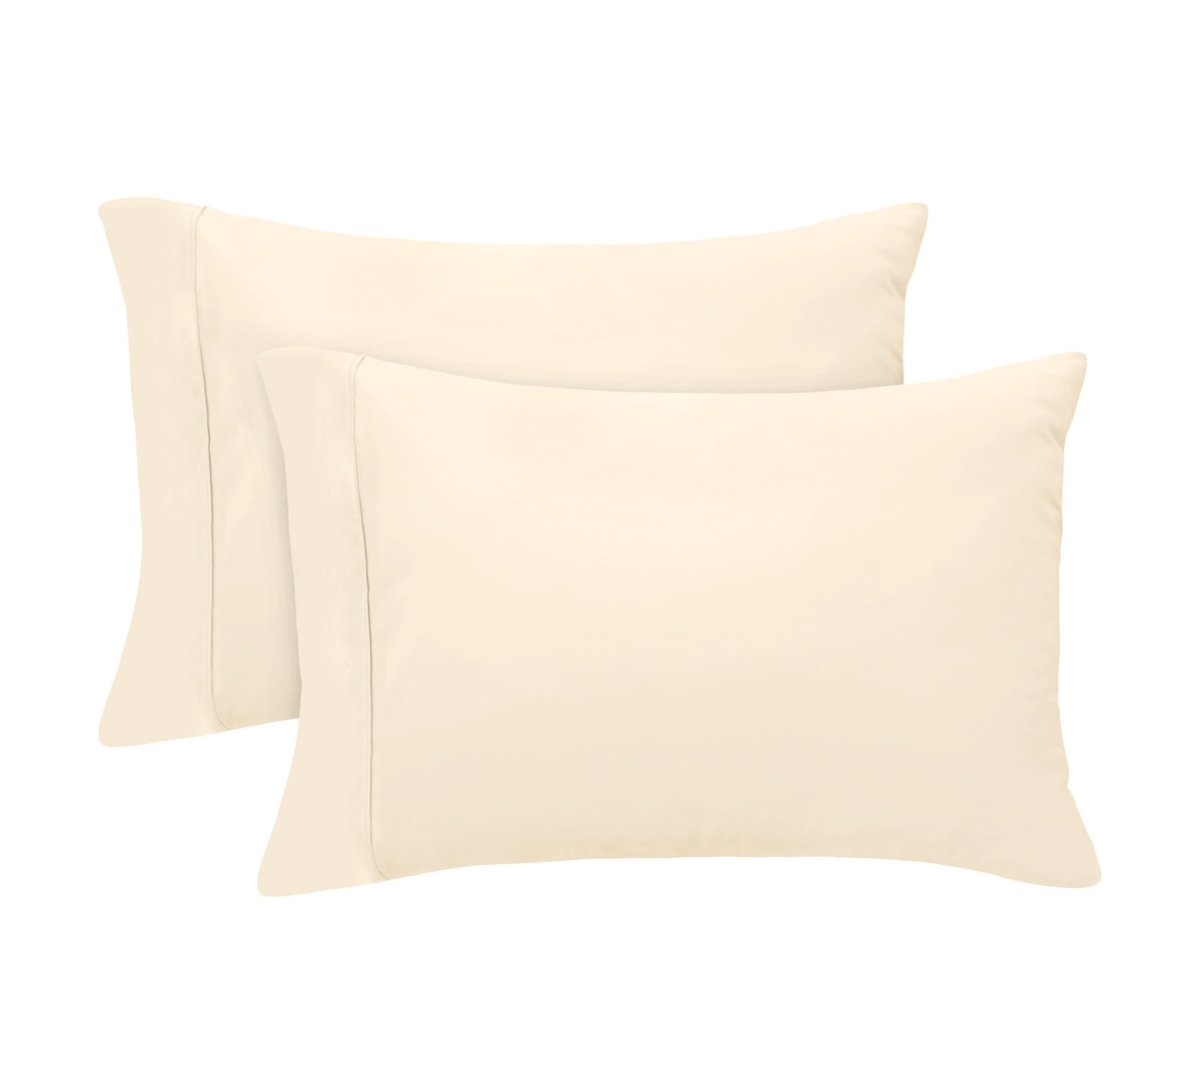 Yms008198 Luxury 620 Thread Count 100 Percent Cotton Pillowcase Set, Ivory - Standard - 2 Piece